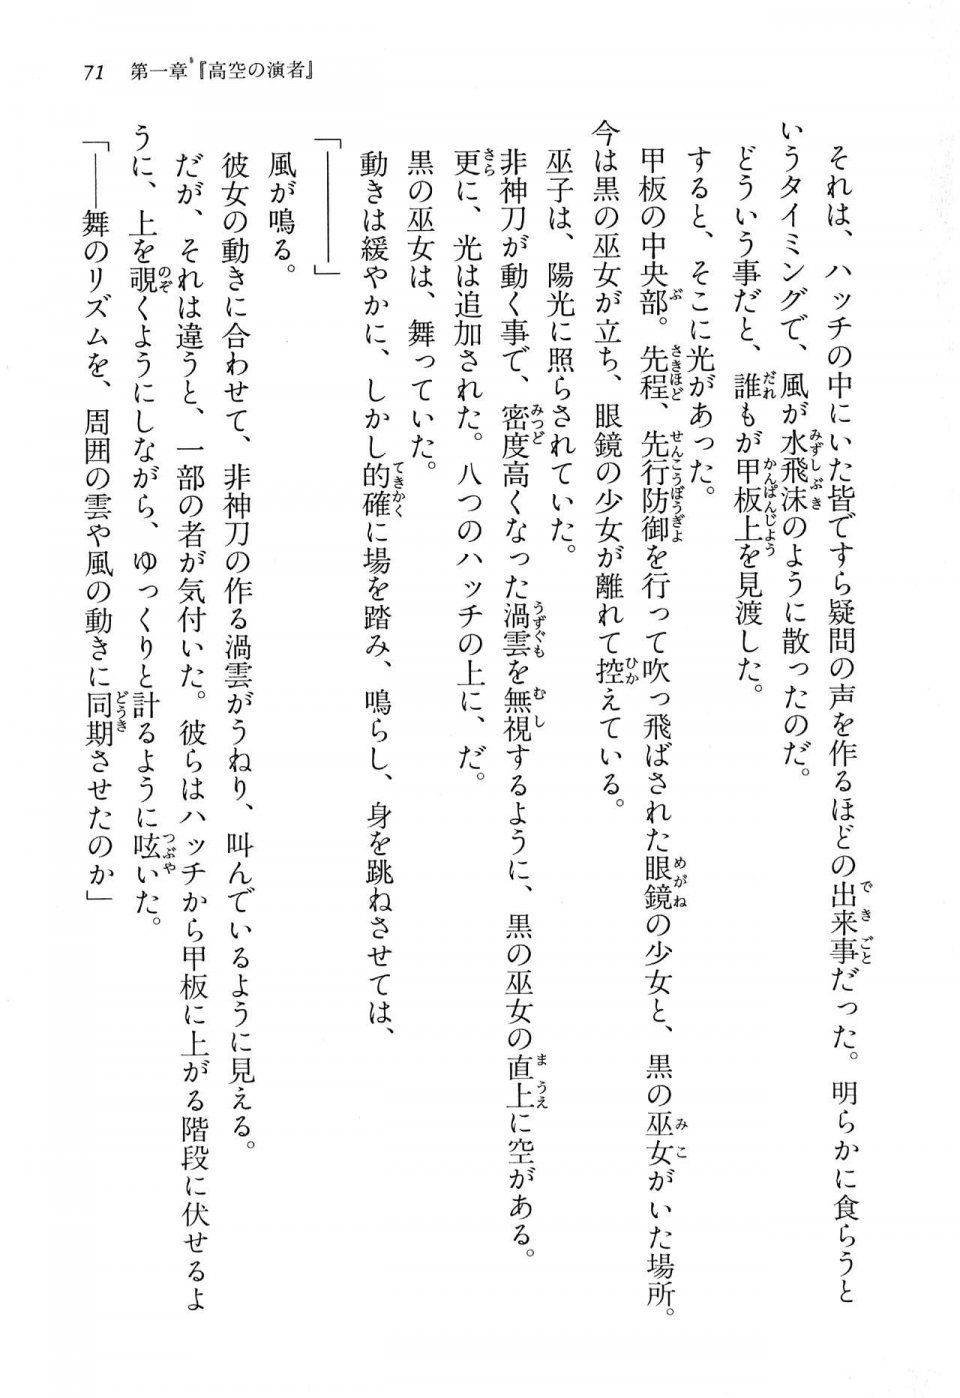 Kyoukai Senjou no Horizon BD Special Mininovel Vol 1(1A) - Photo #75